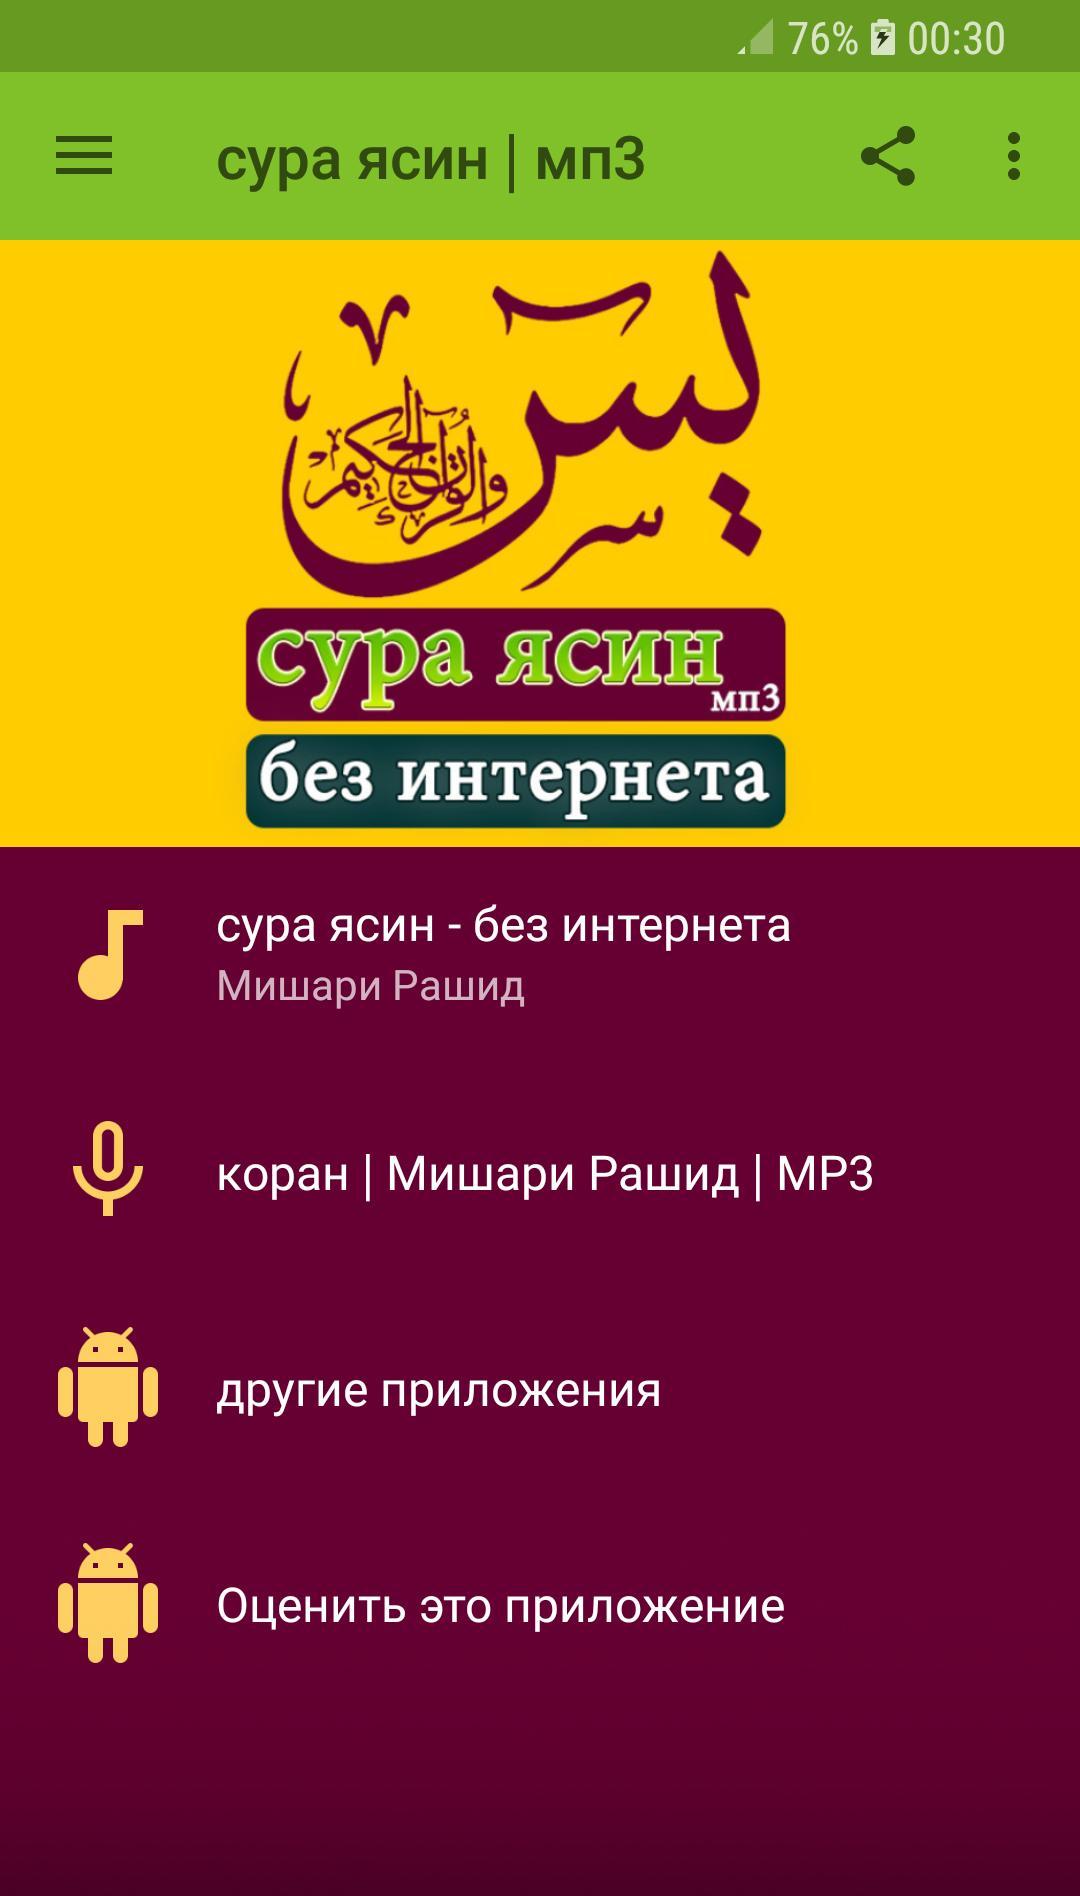 сура ясин - без интернета мп3 мишари рашид APK for Android Download